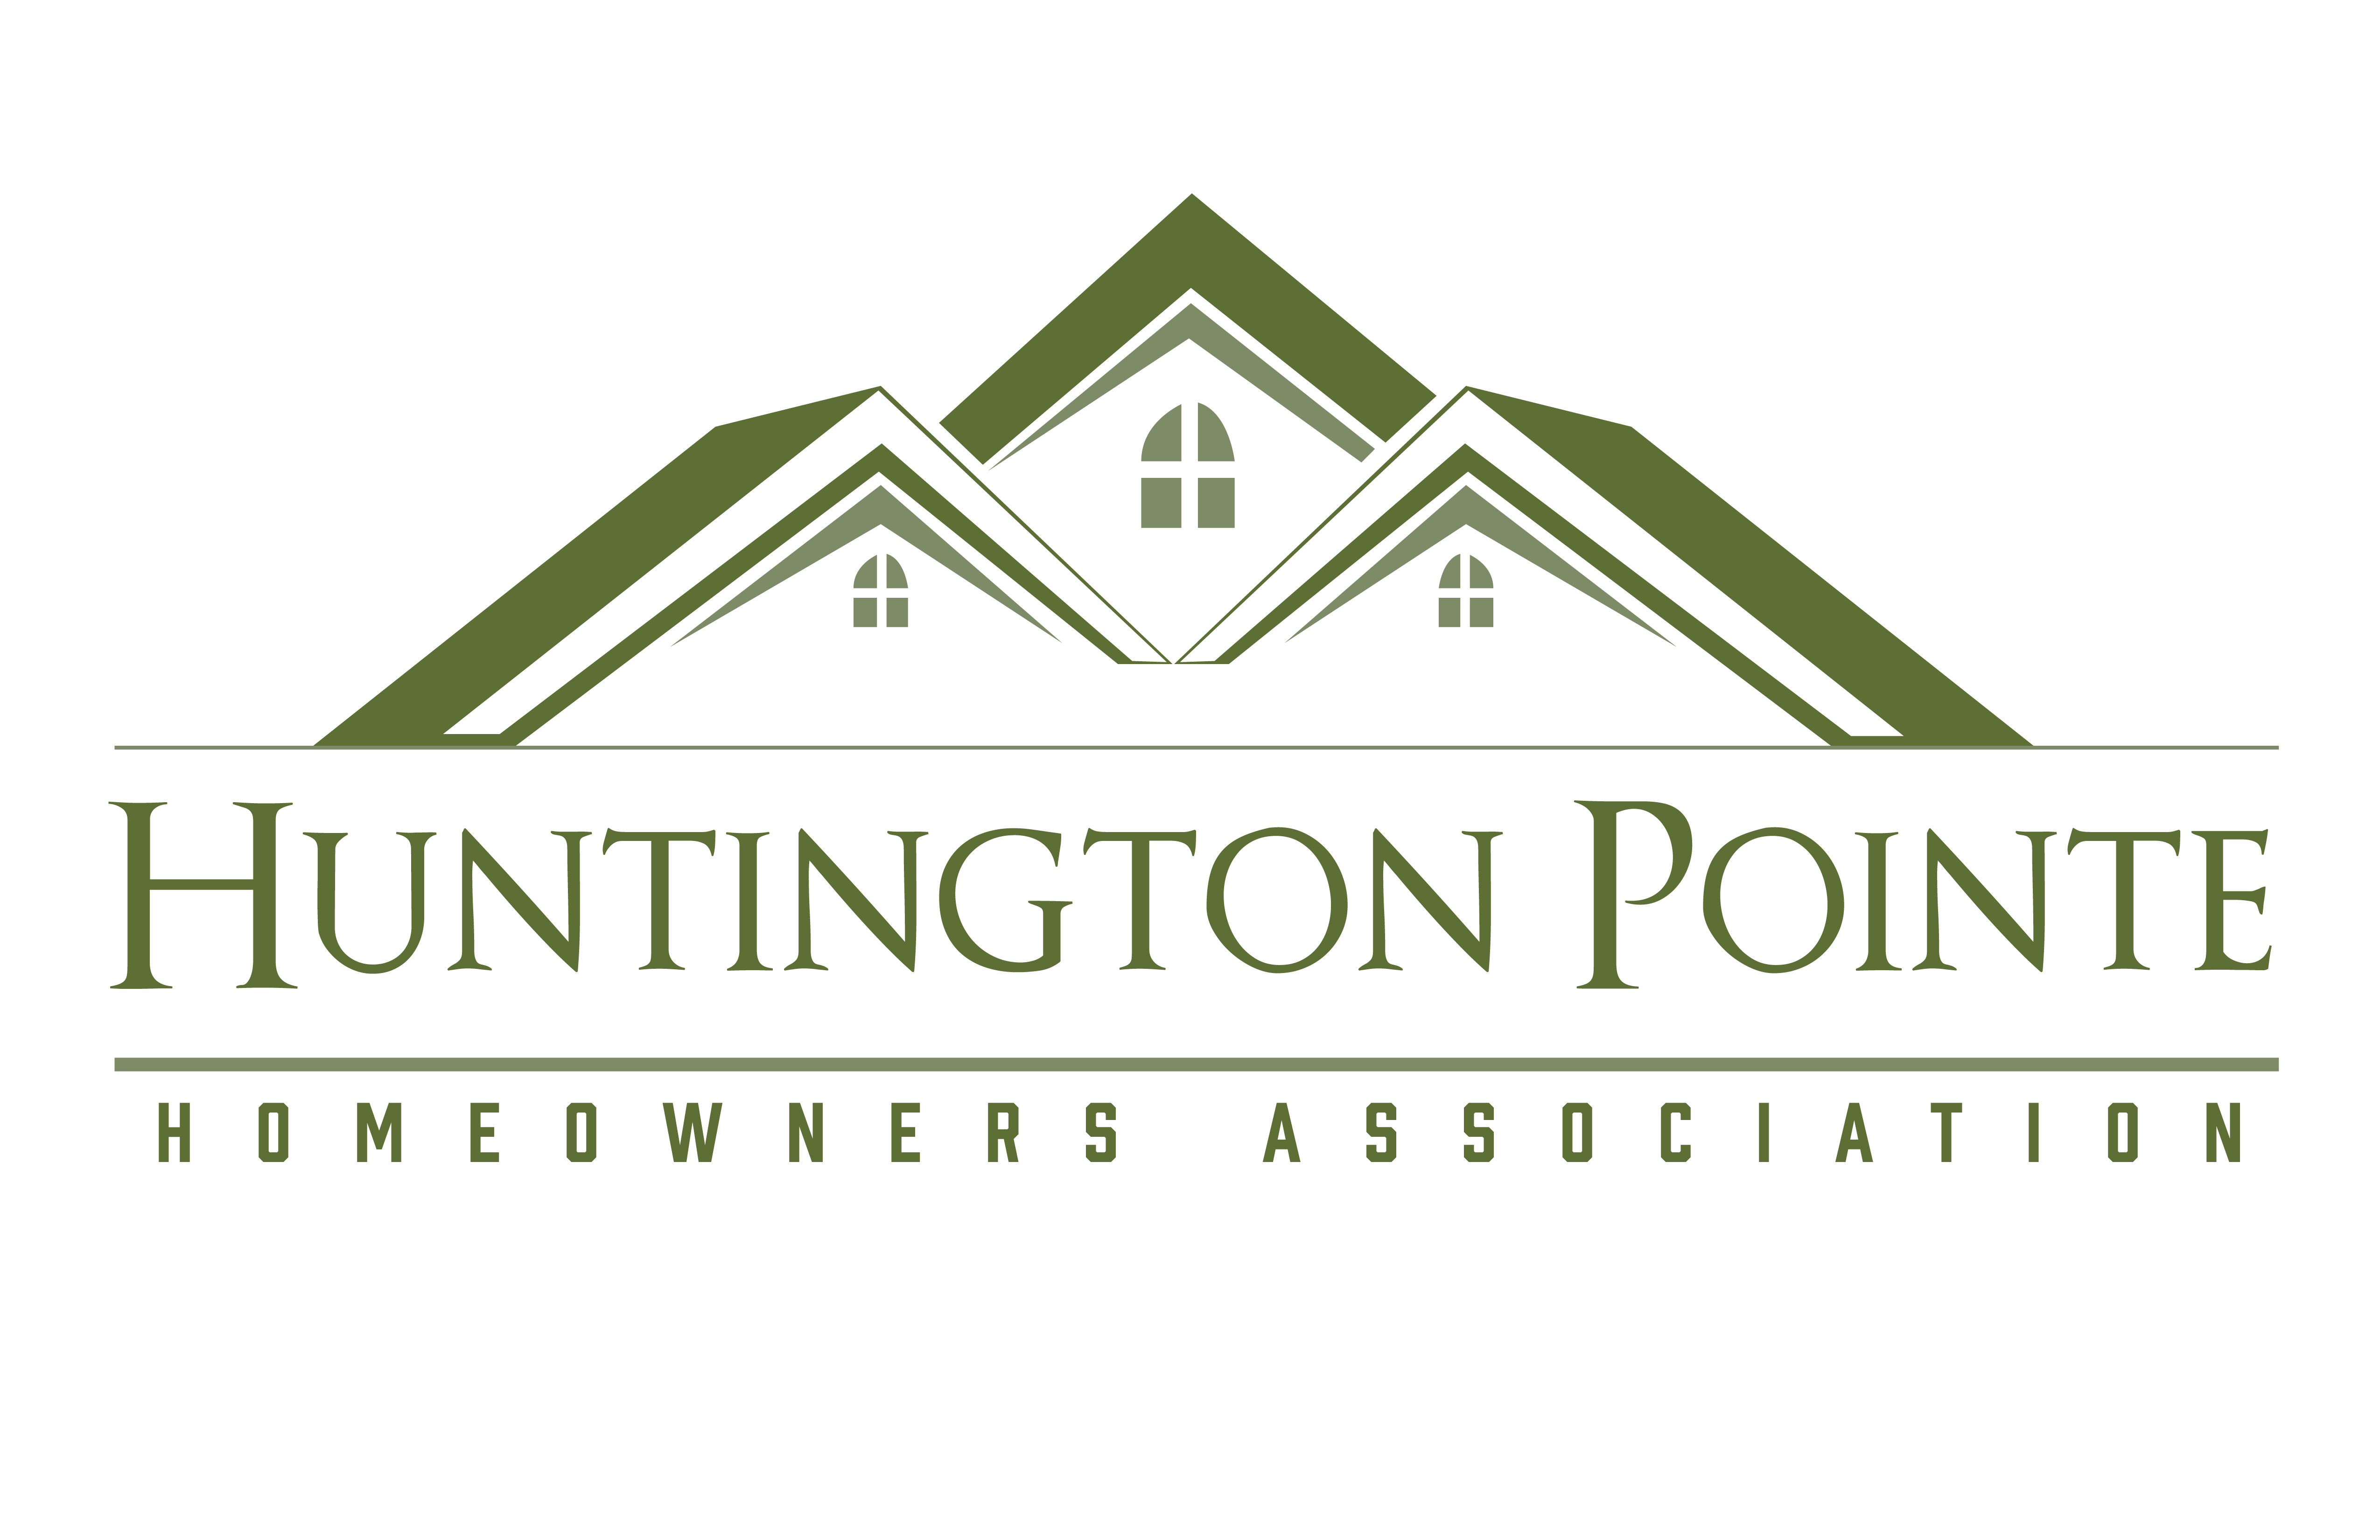 HuntingtonPointe logo_v1-01 (1)